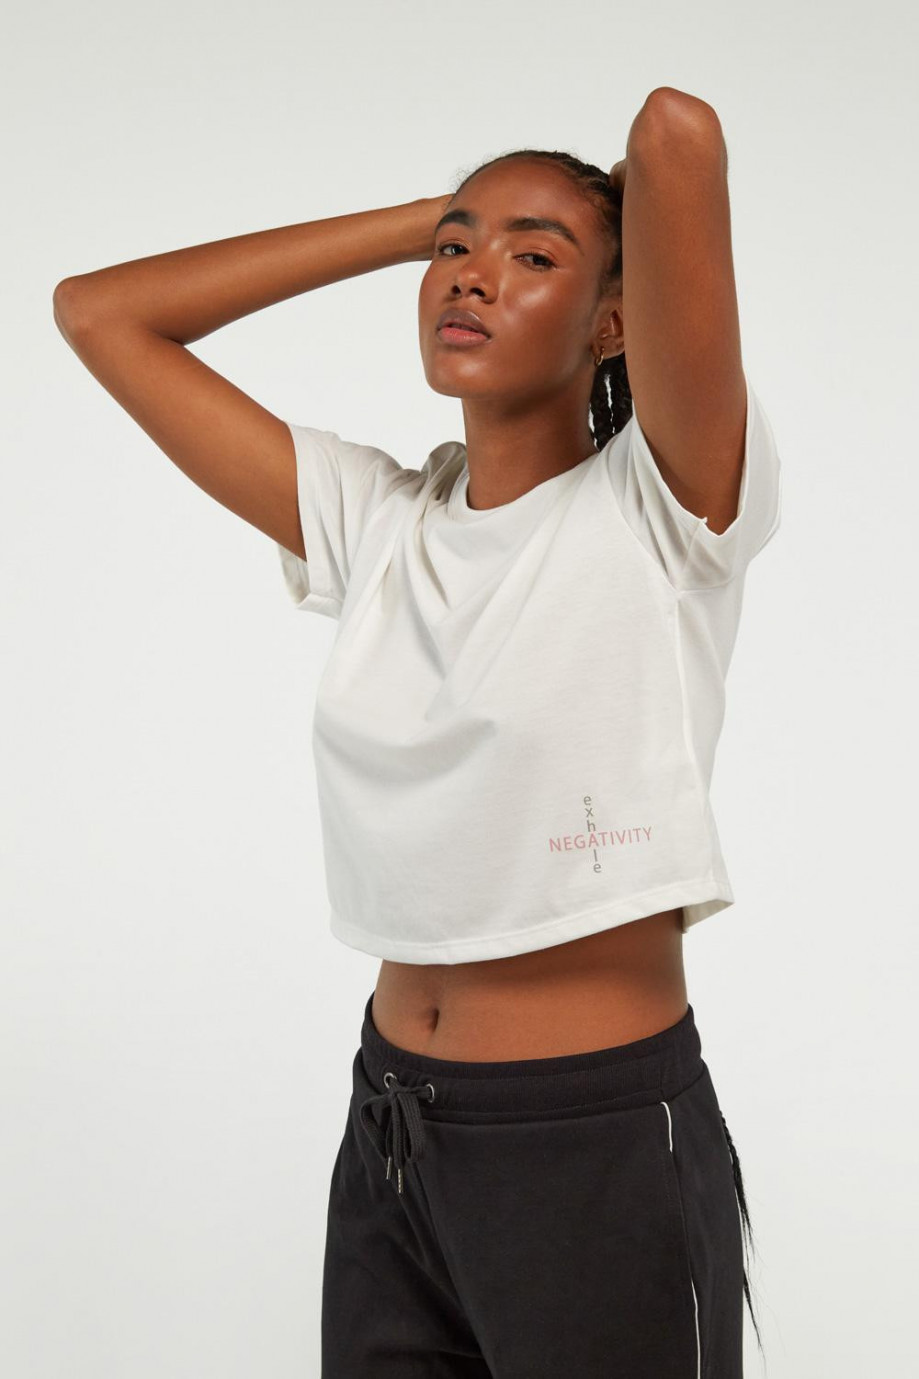 Camiseta crema clara manga corta con estampado minimalista